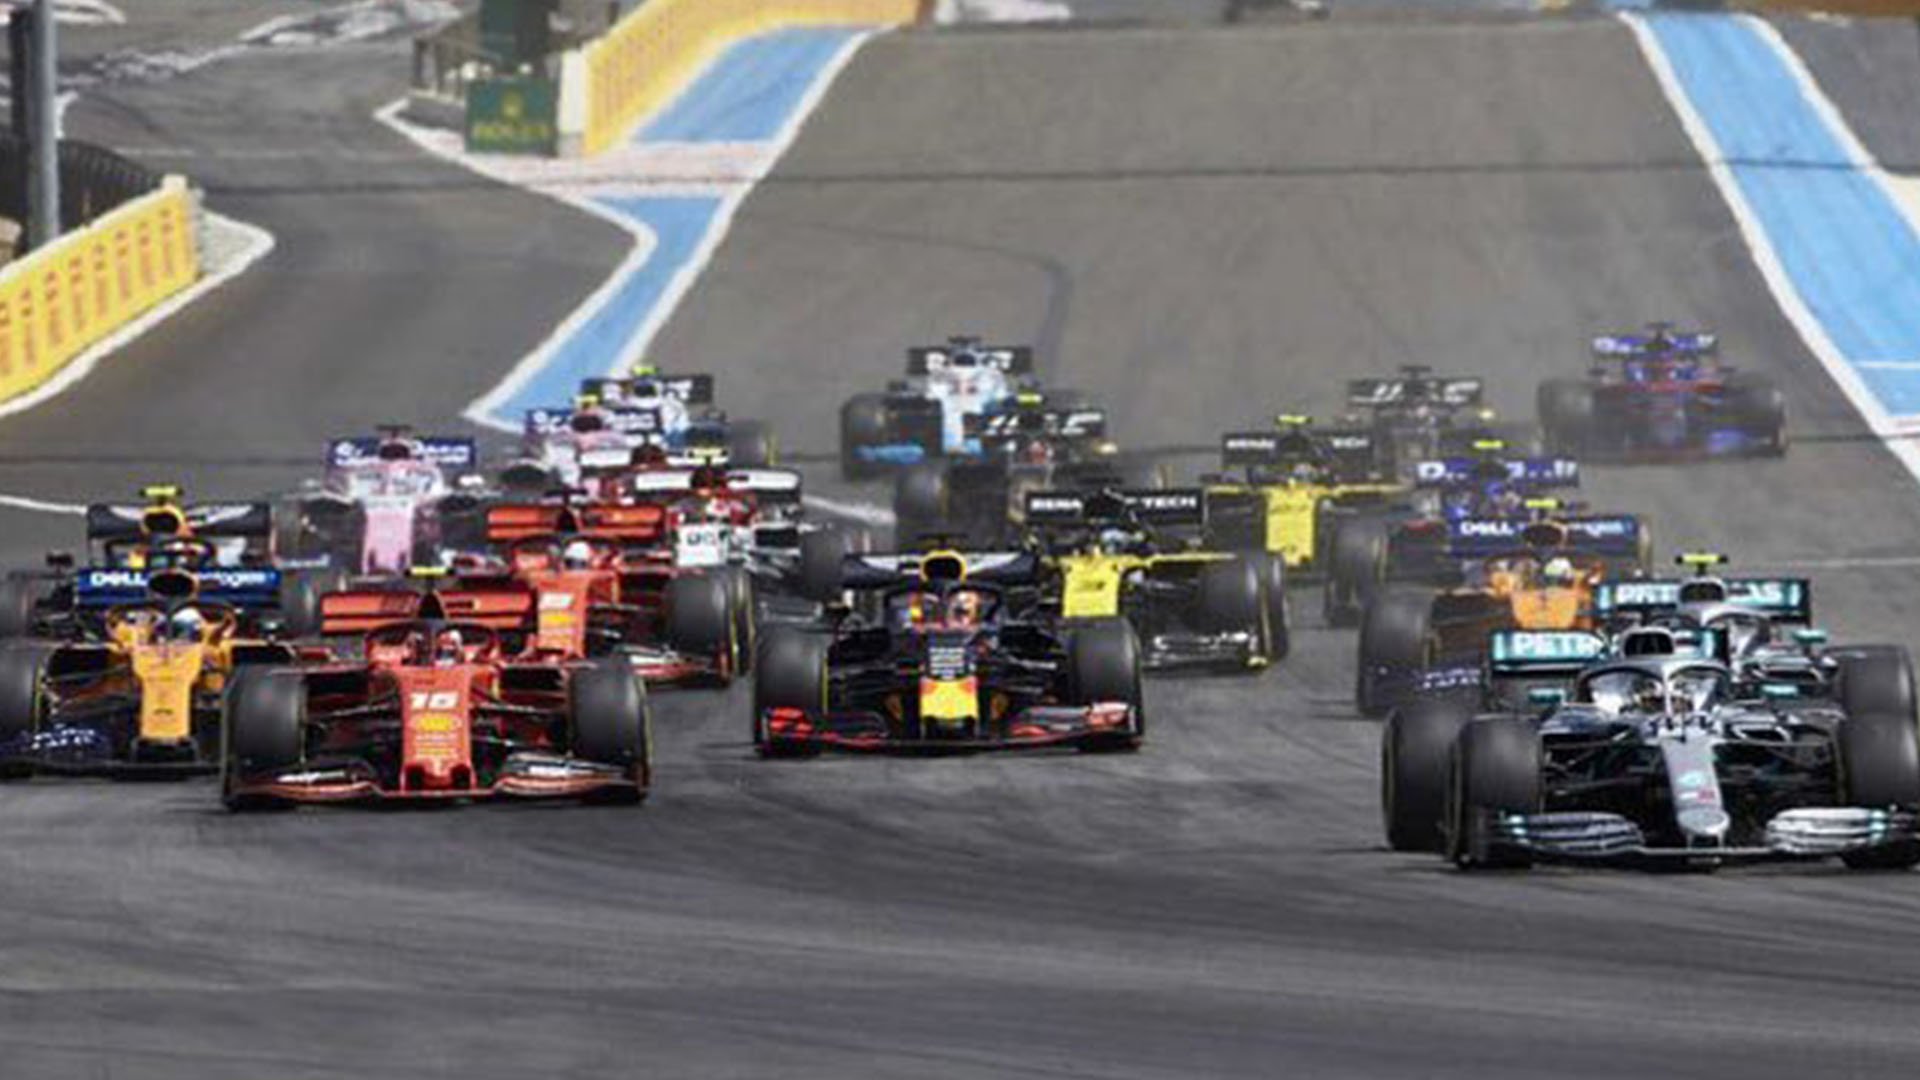 Formula 1: 2021 season to kick-off in March 19 with Australian GP